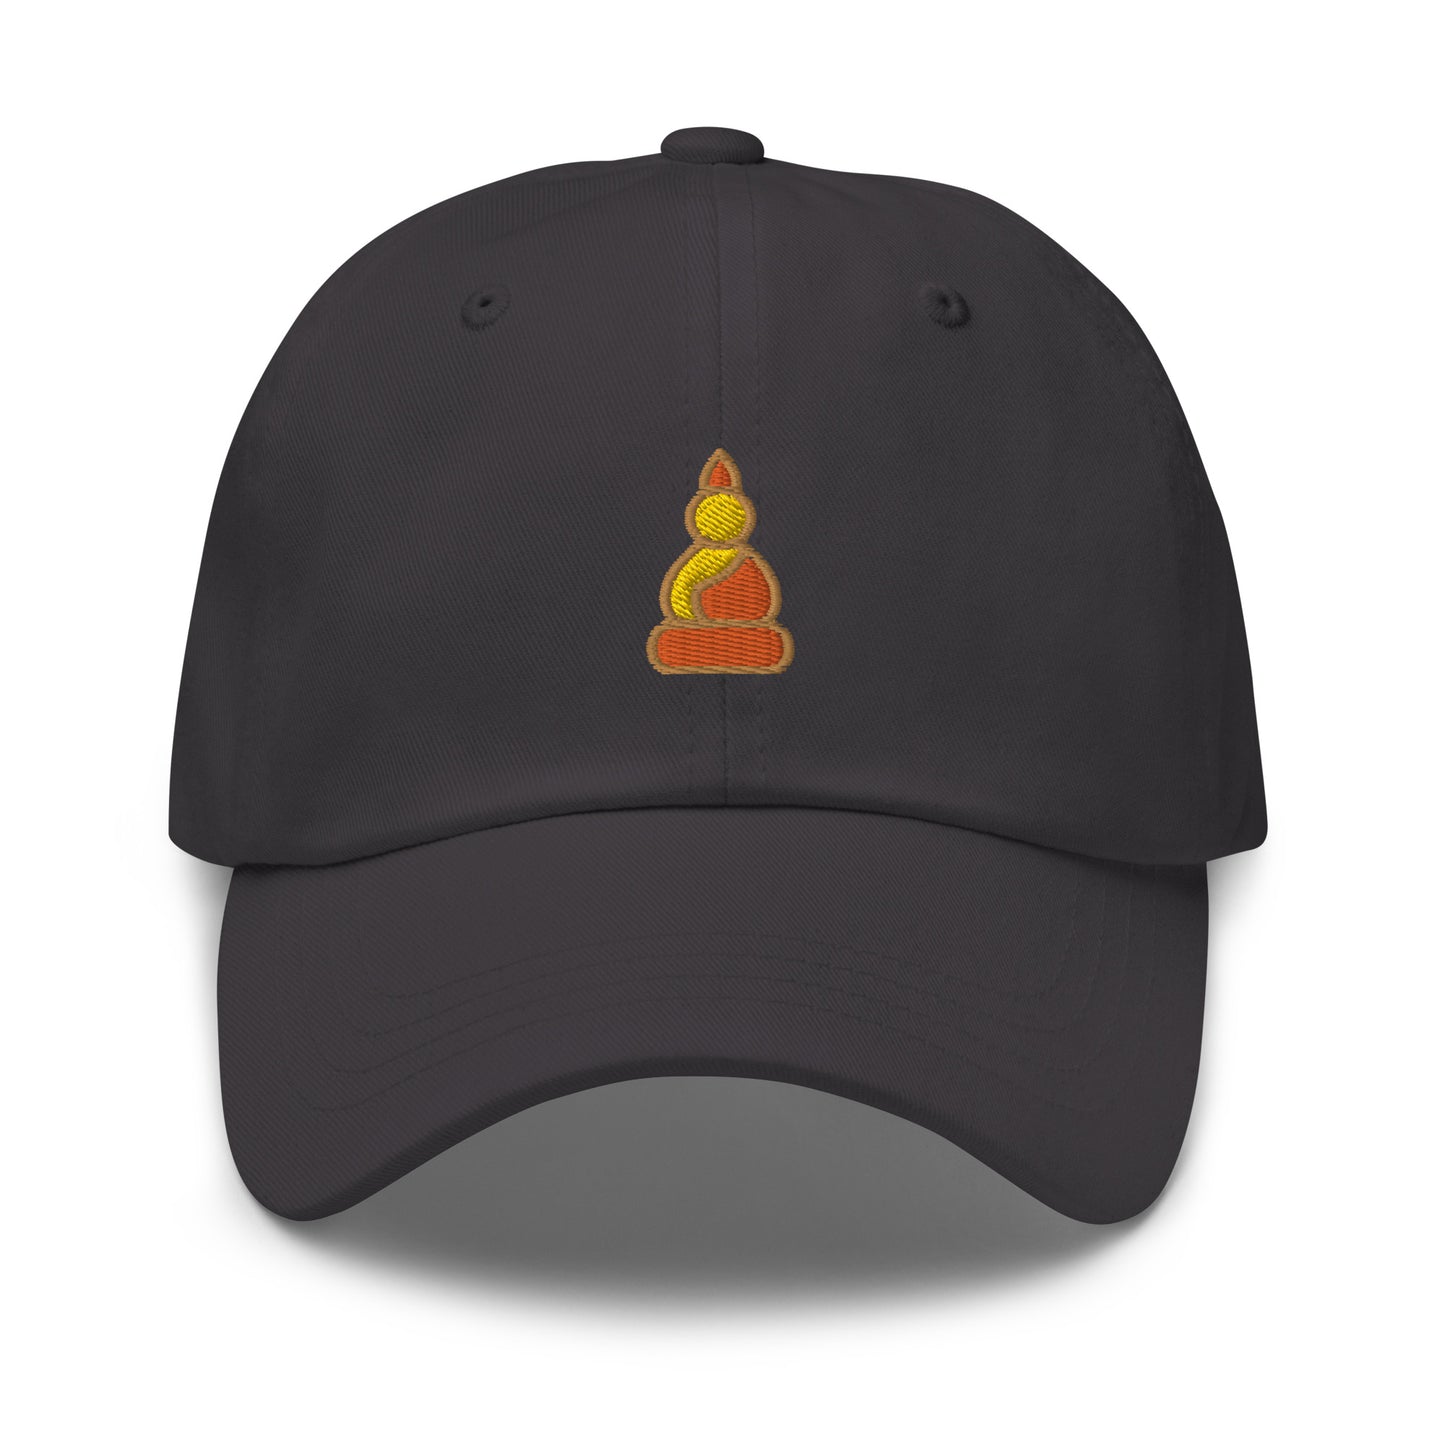 Dad Cap with Buddhism Symbol